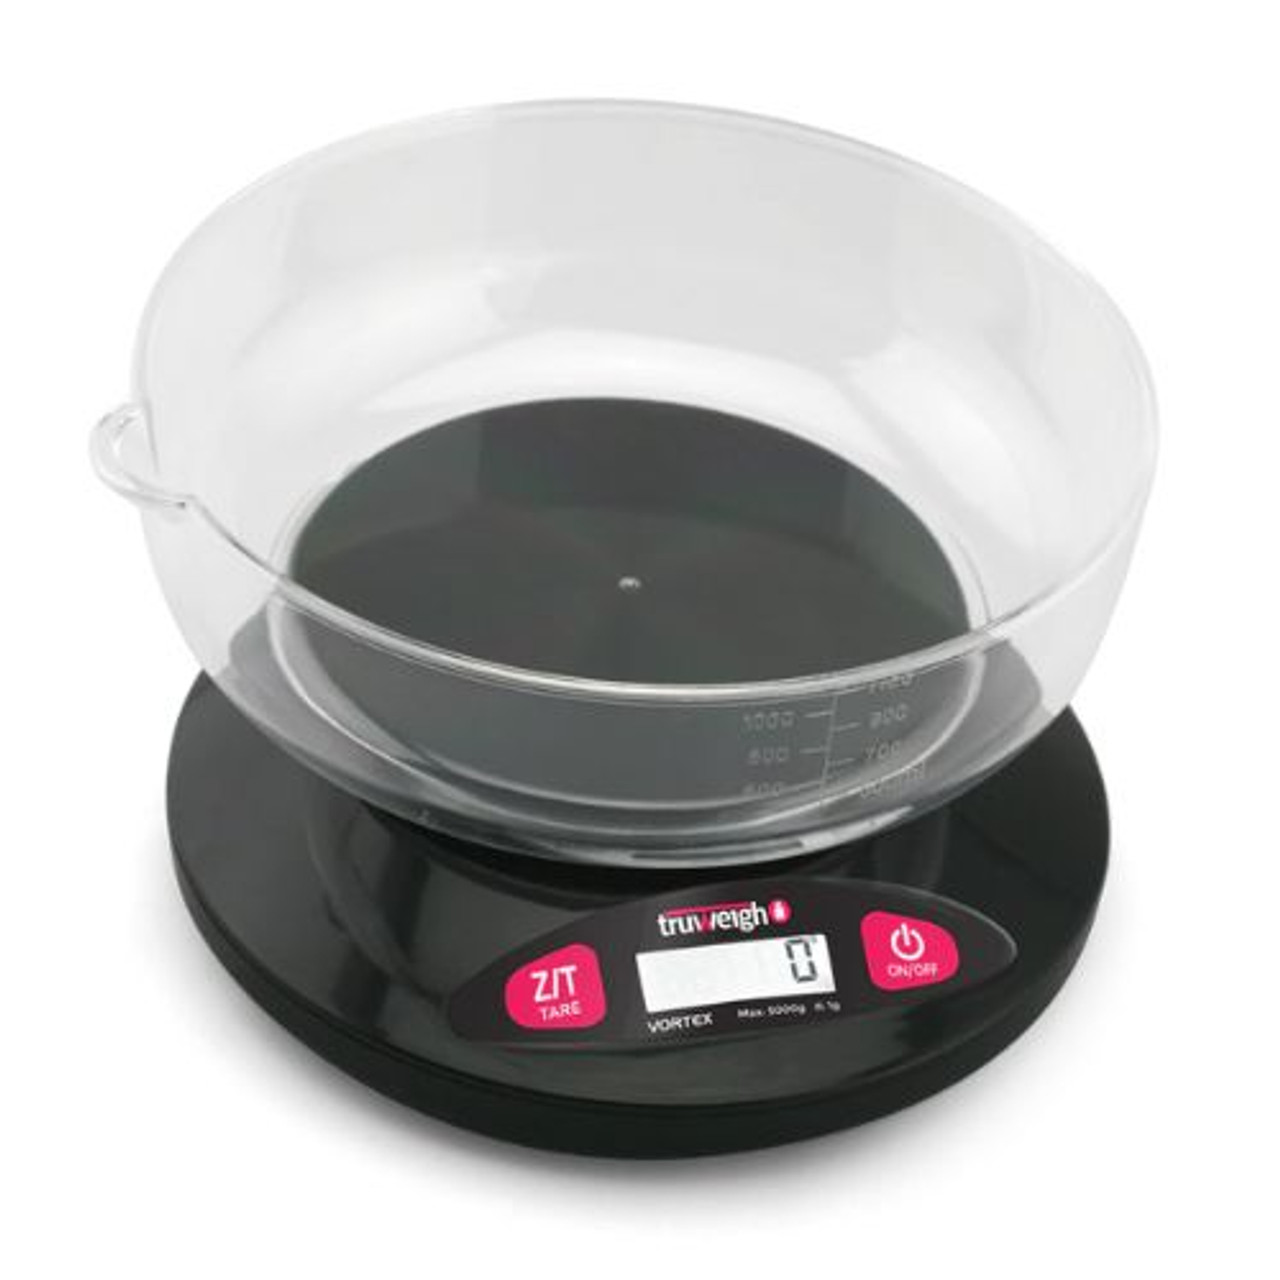 Truweigh Vortex Bowl Digital Scale - 5000g x 1g - Black